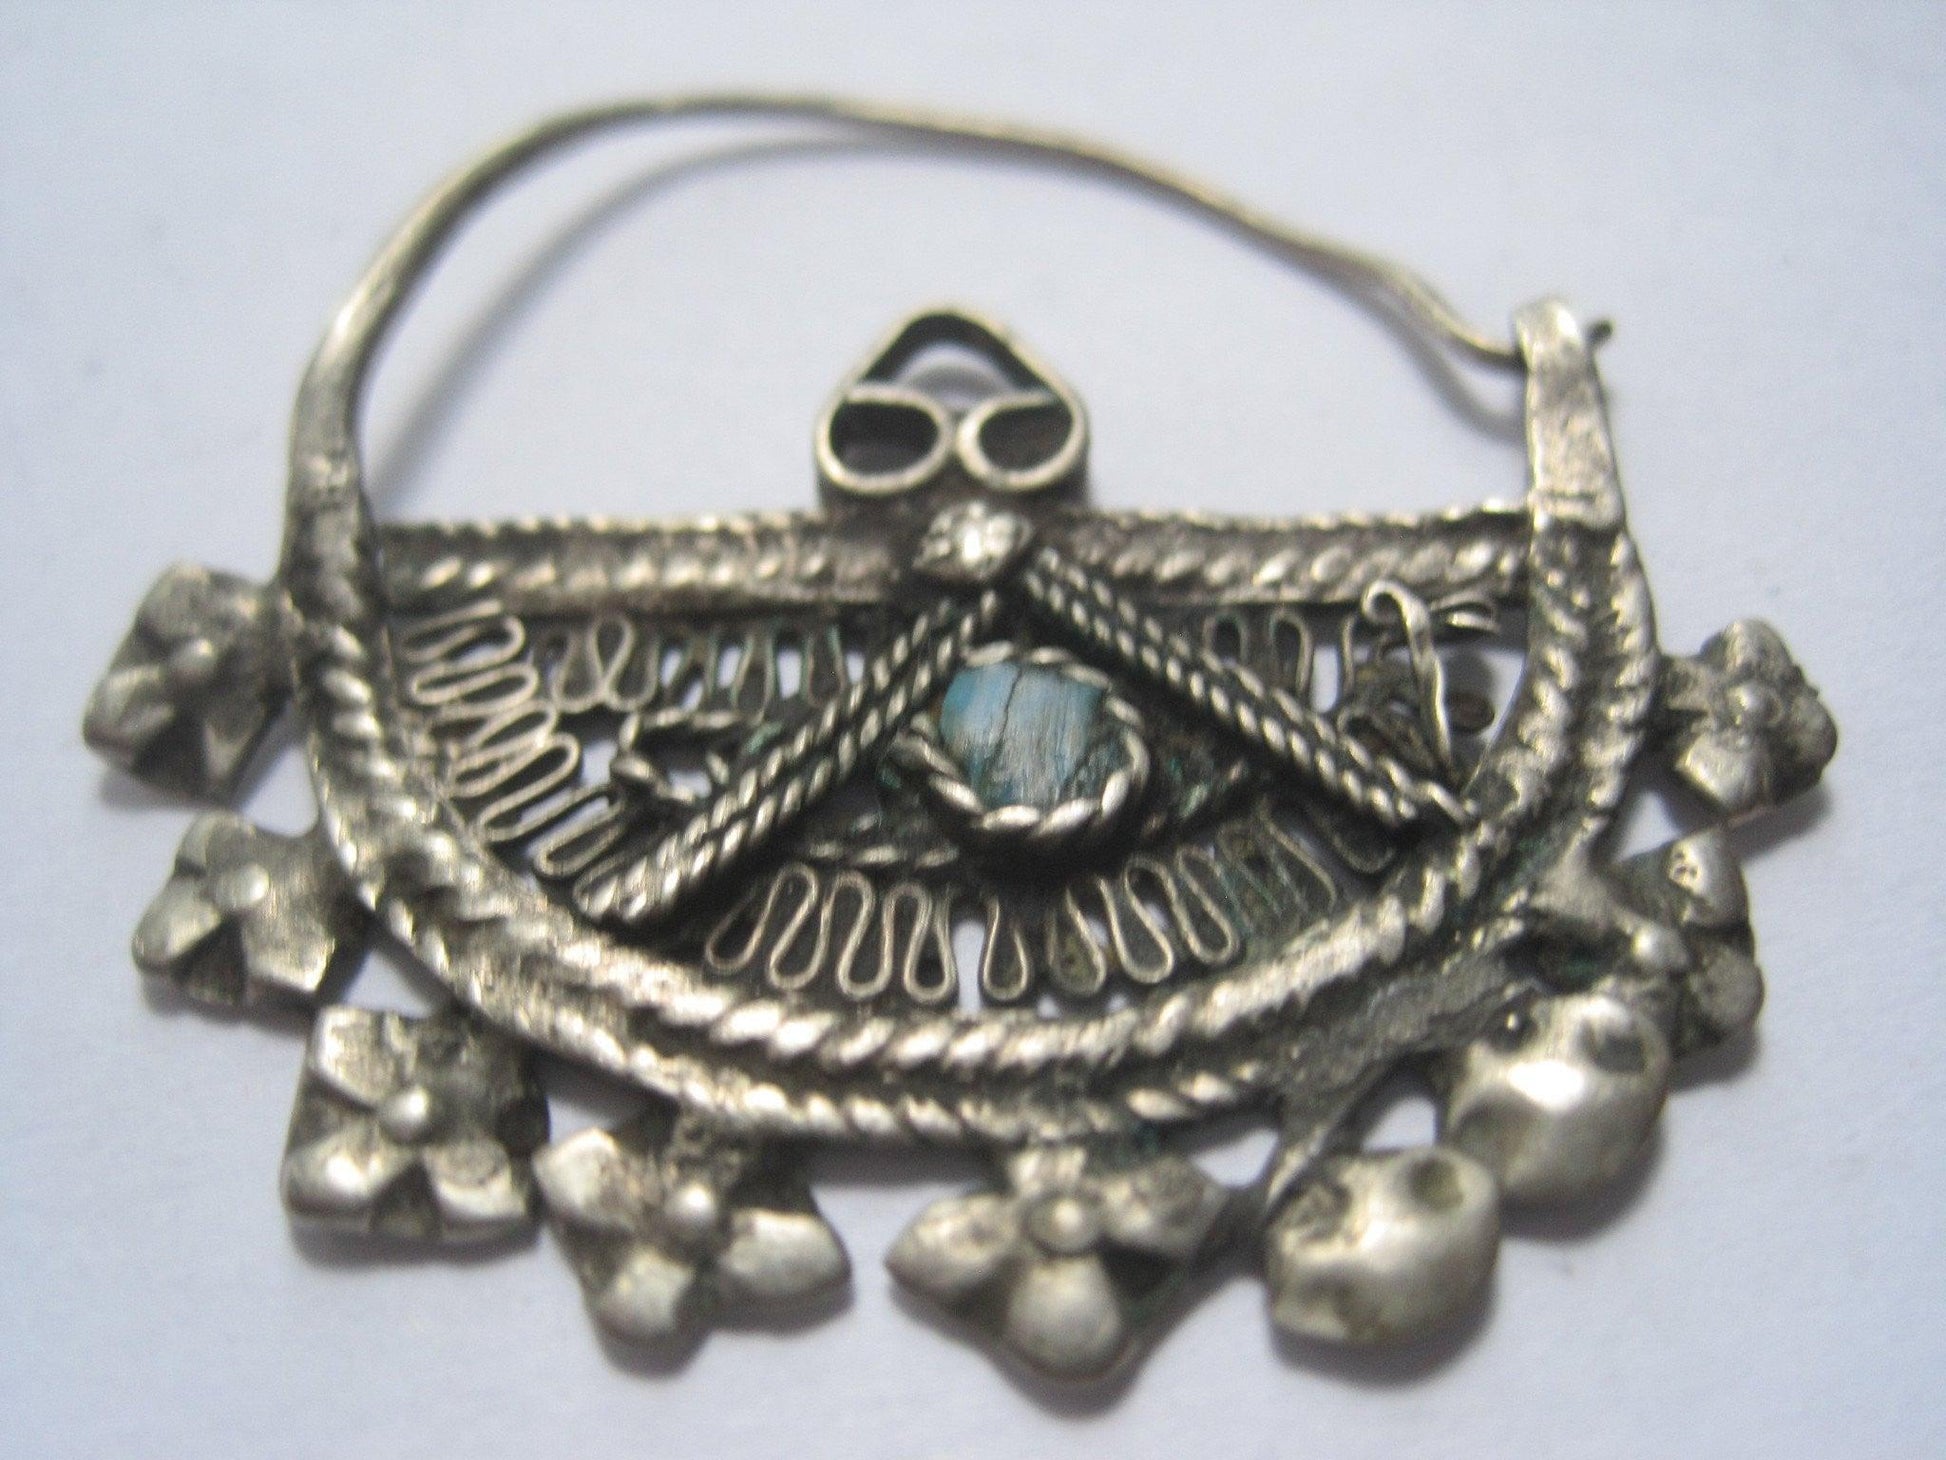 Antique Bedouin Filigree Crescent Islamic Earrings - Anteeka